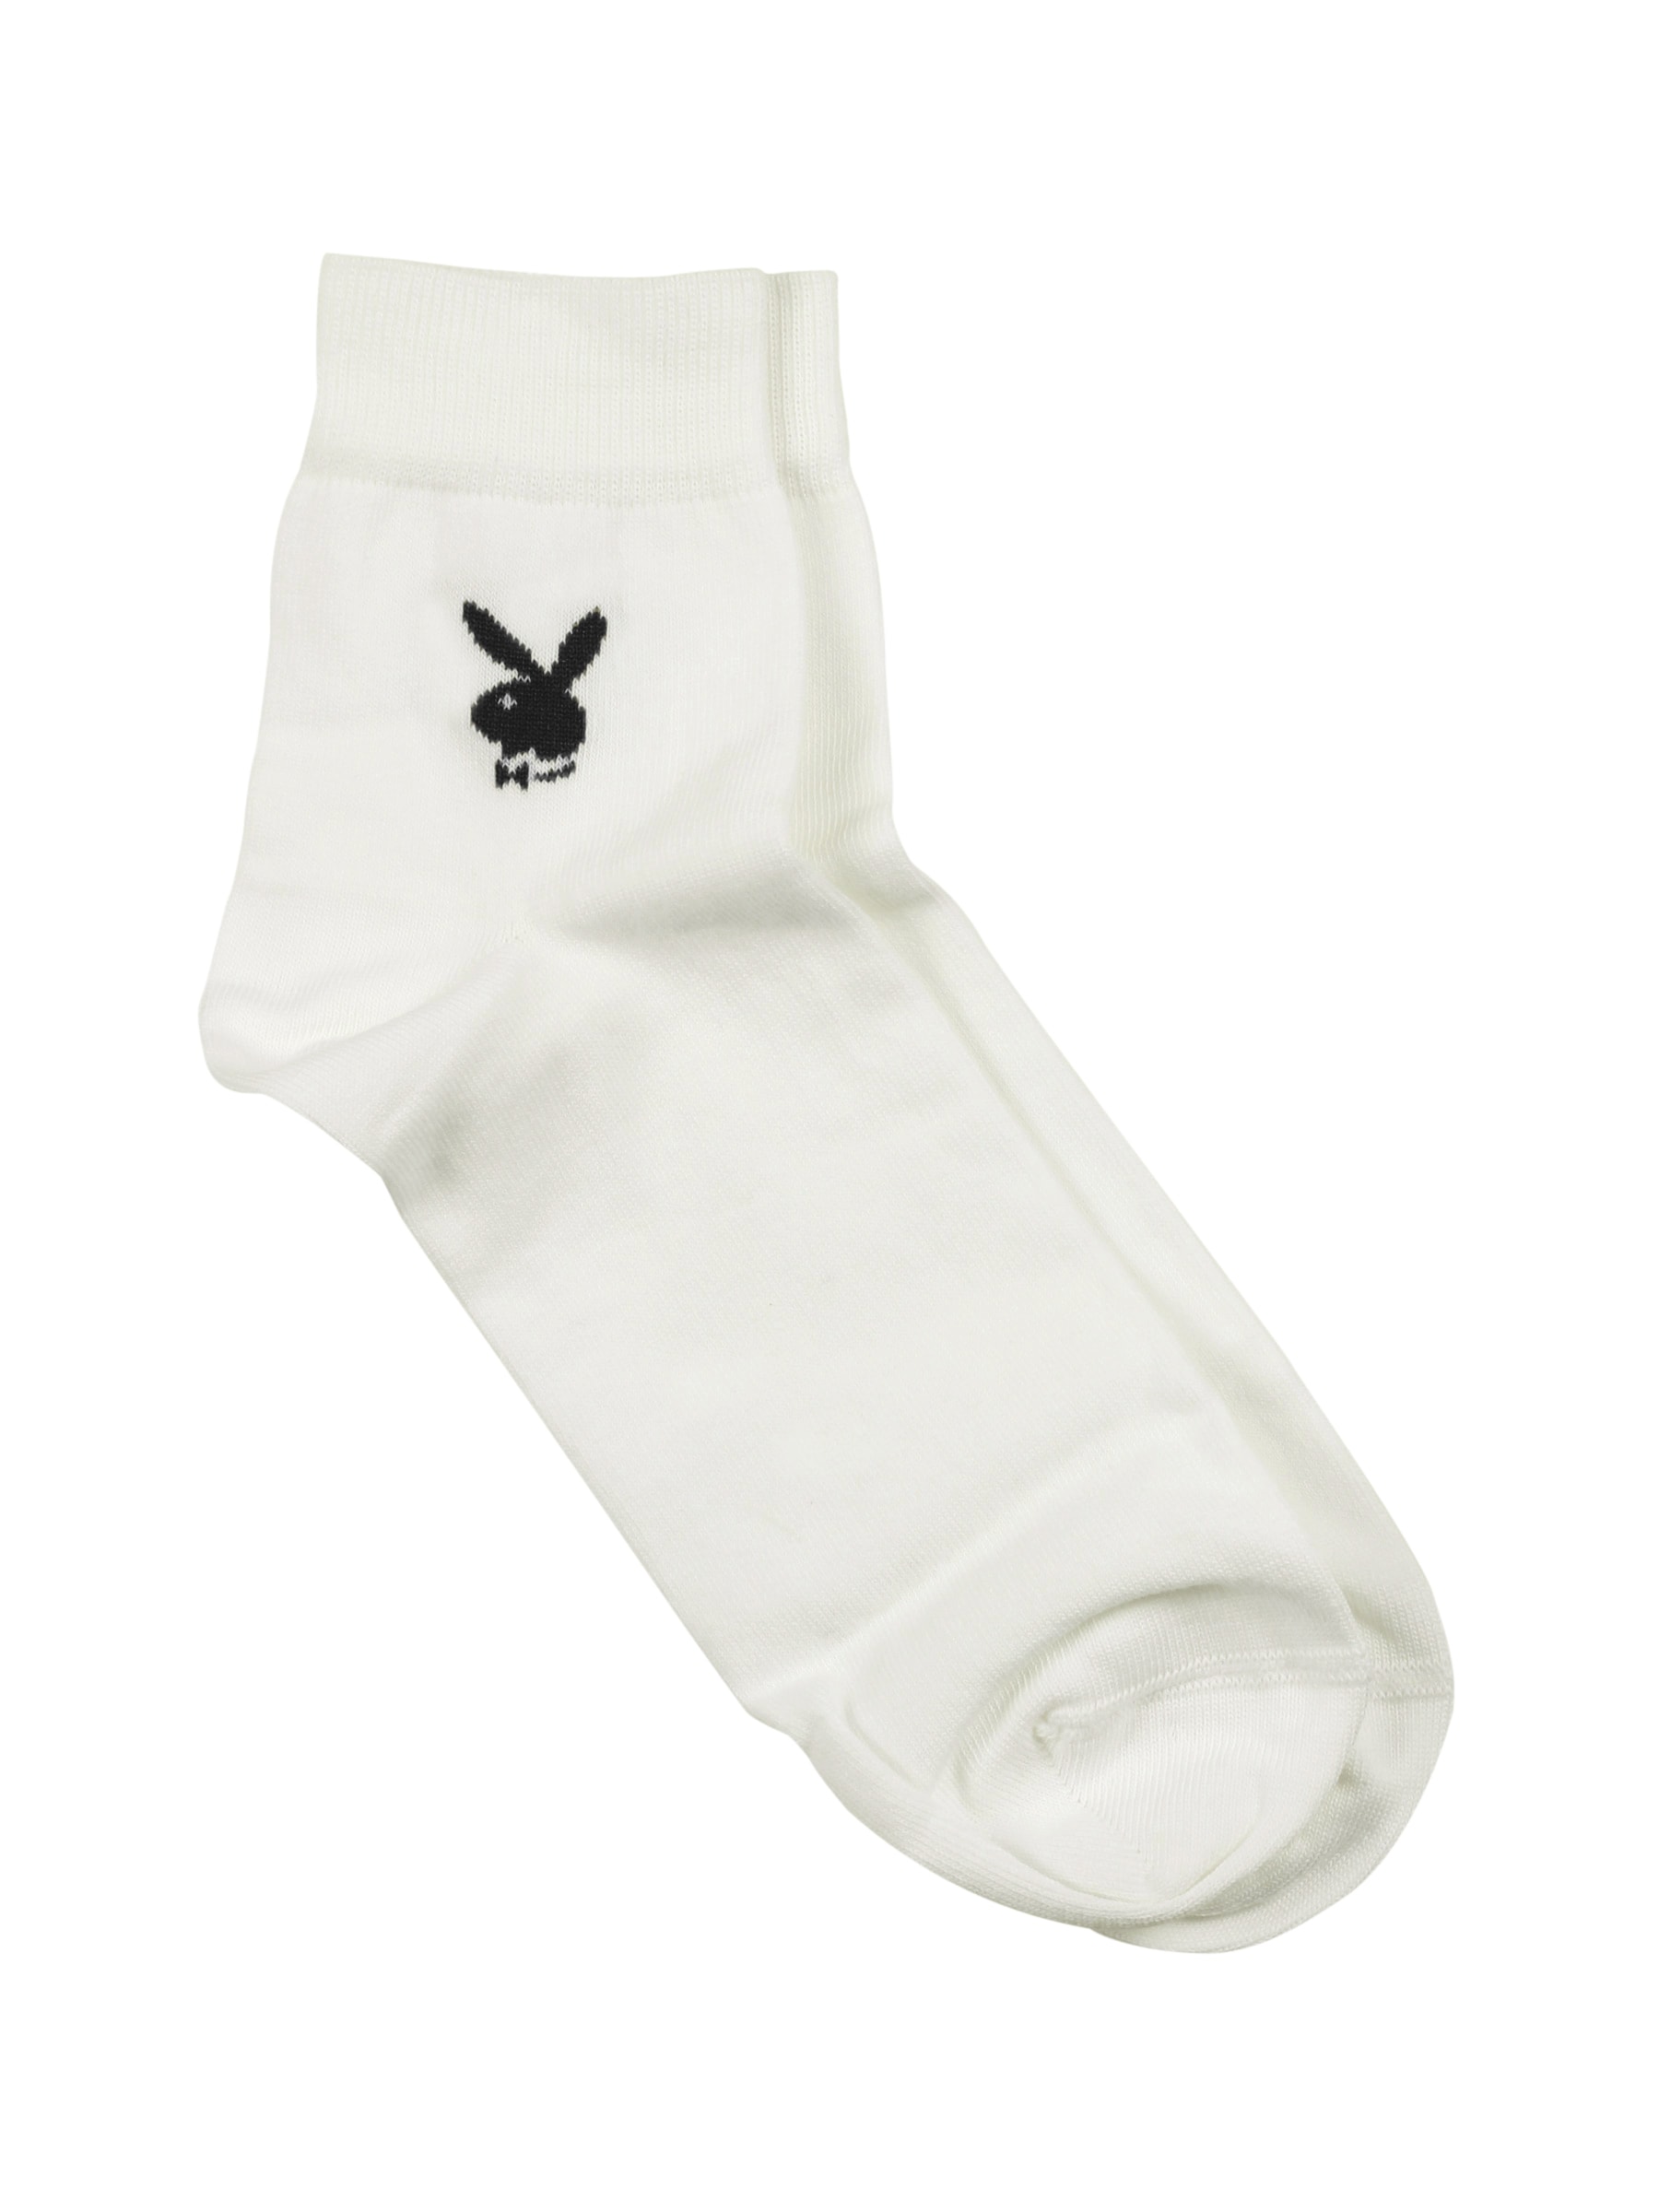 Playboy Men White Socks